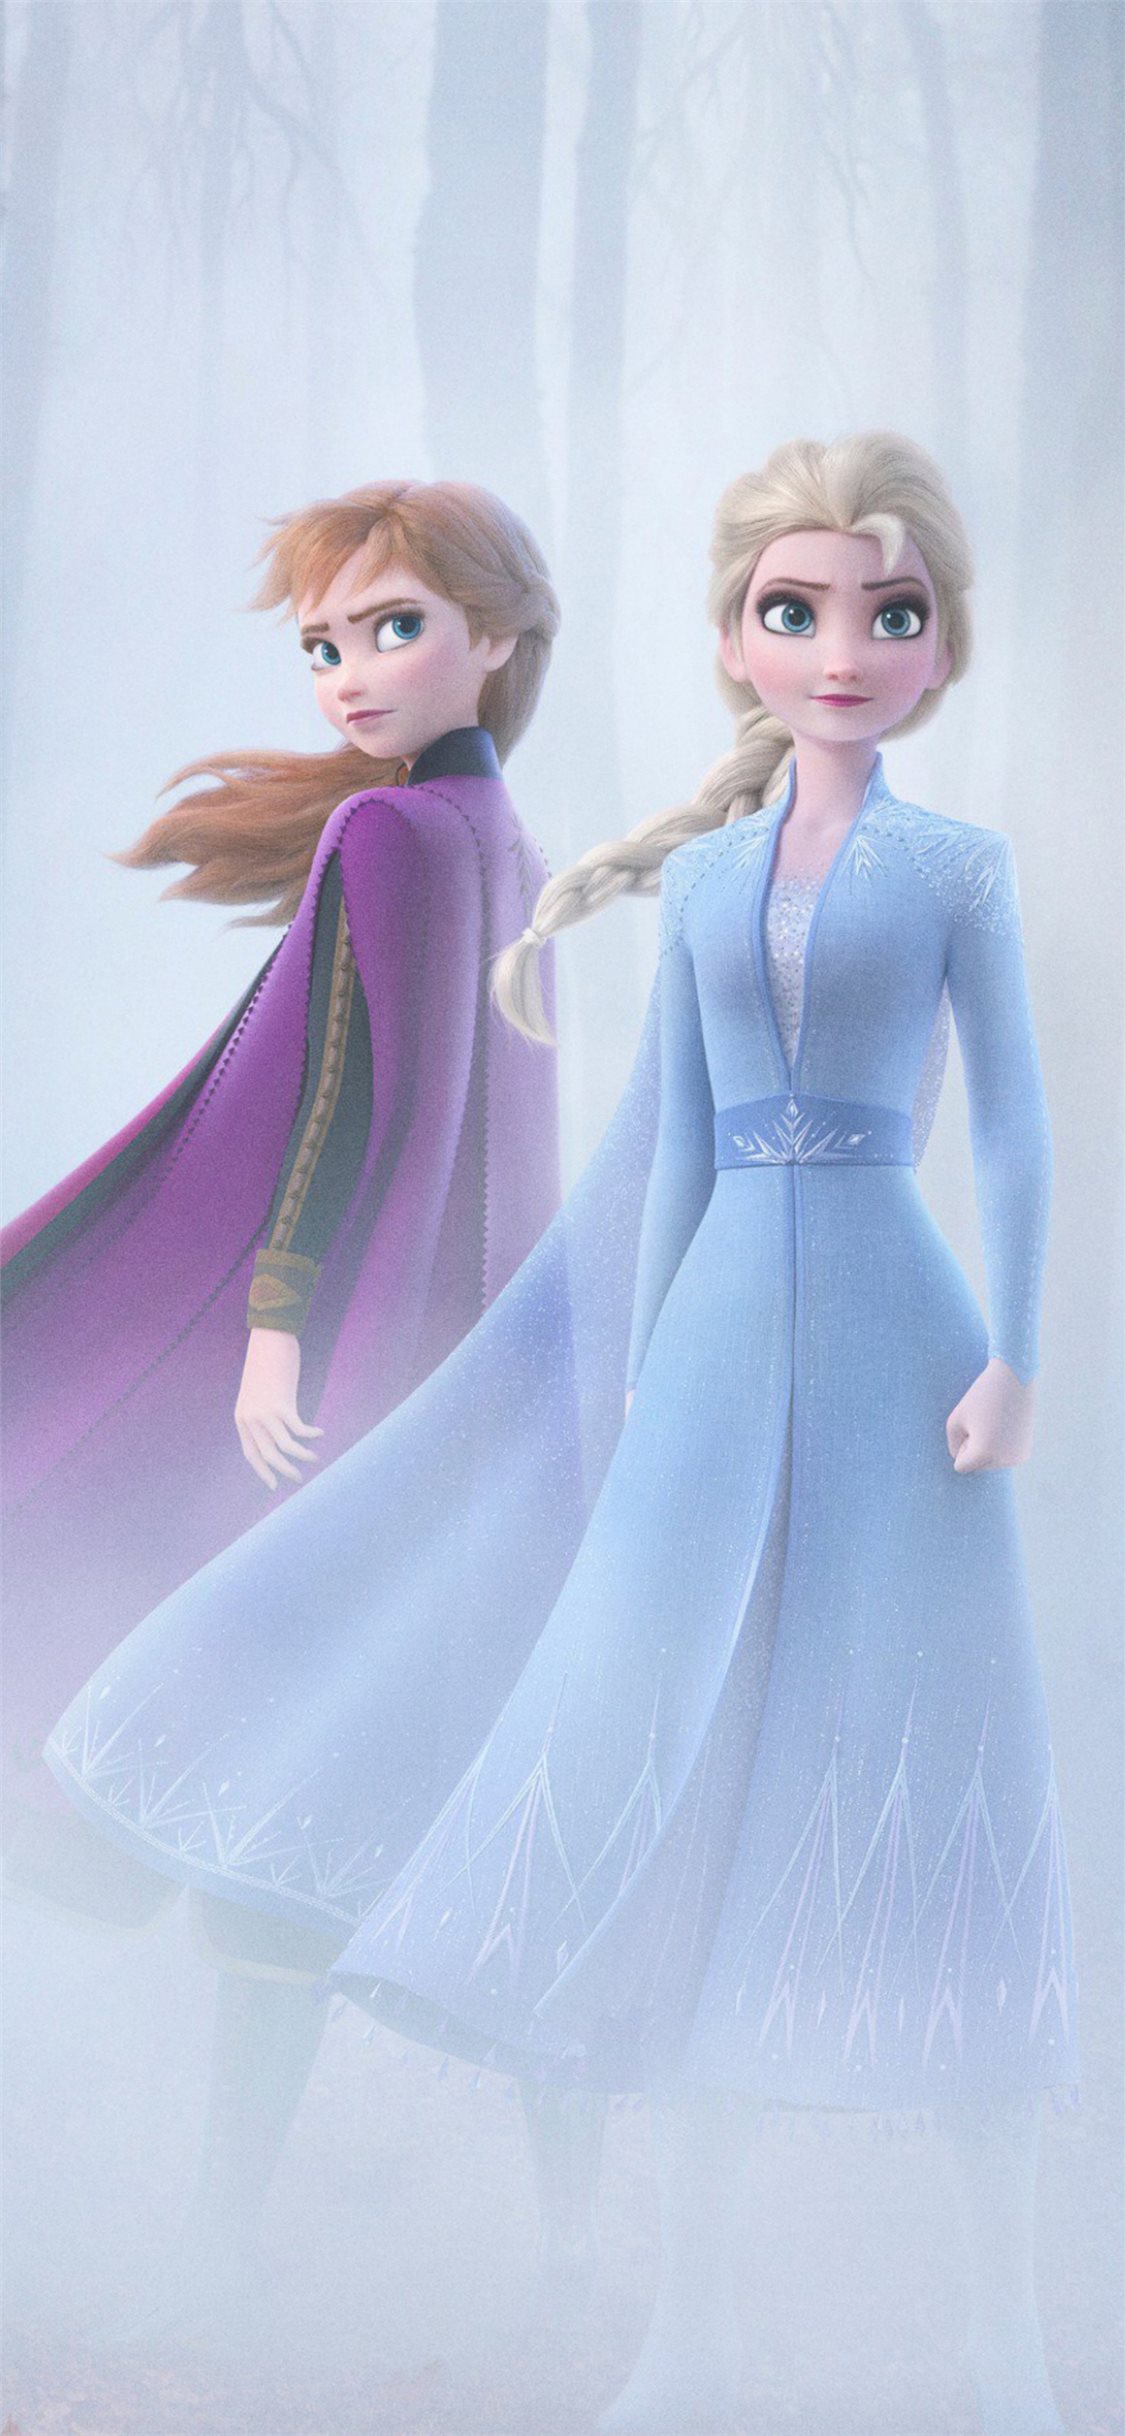 Anna And Elsa In Frozen 4k iPhone X Wallpaper